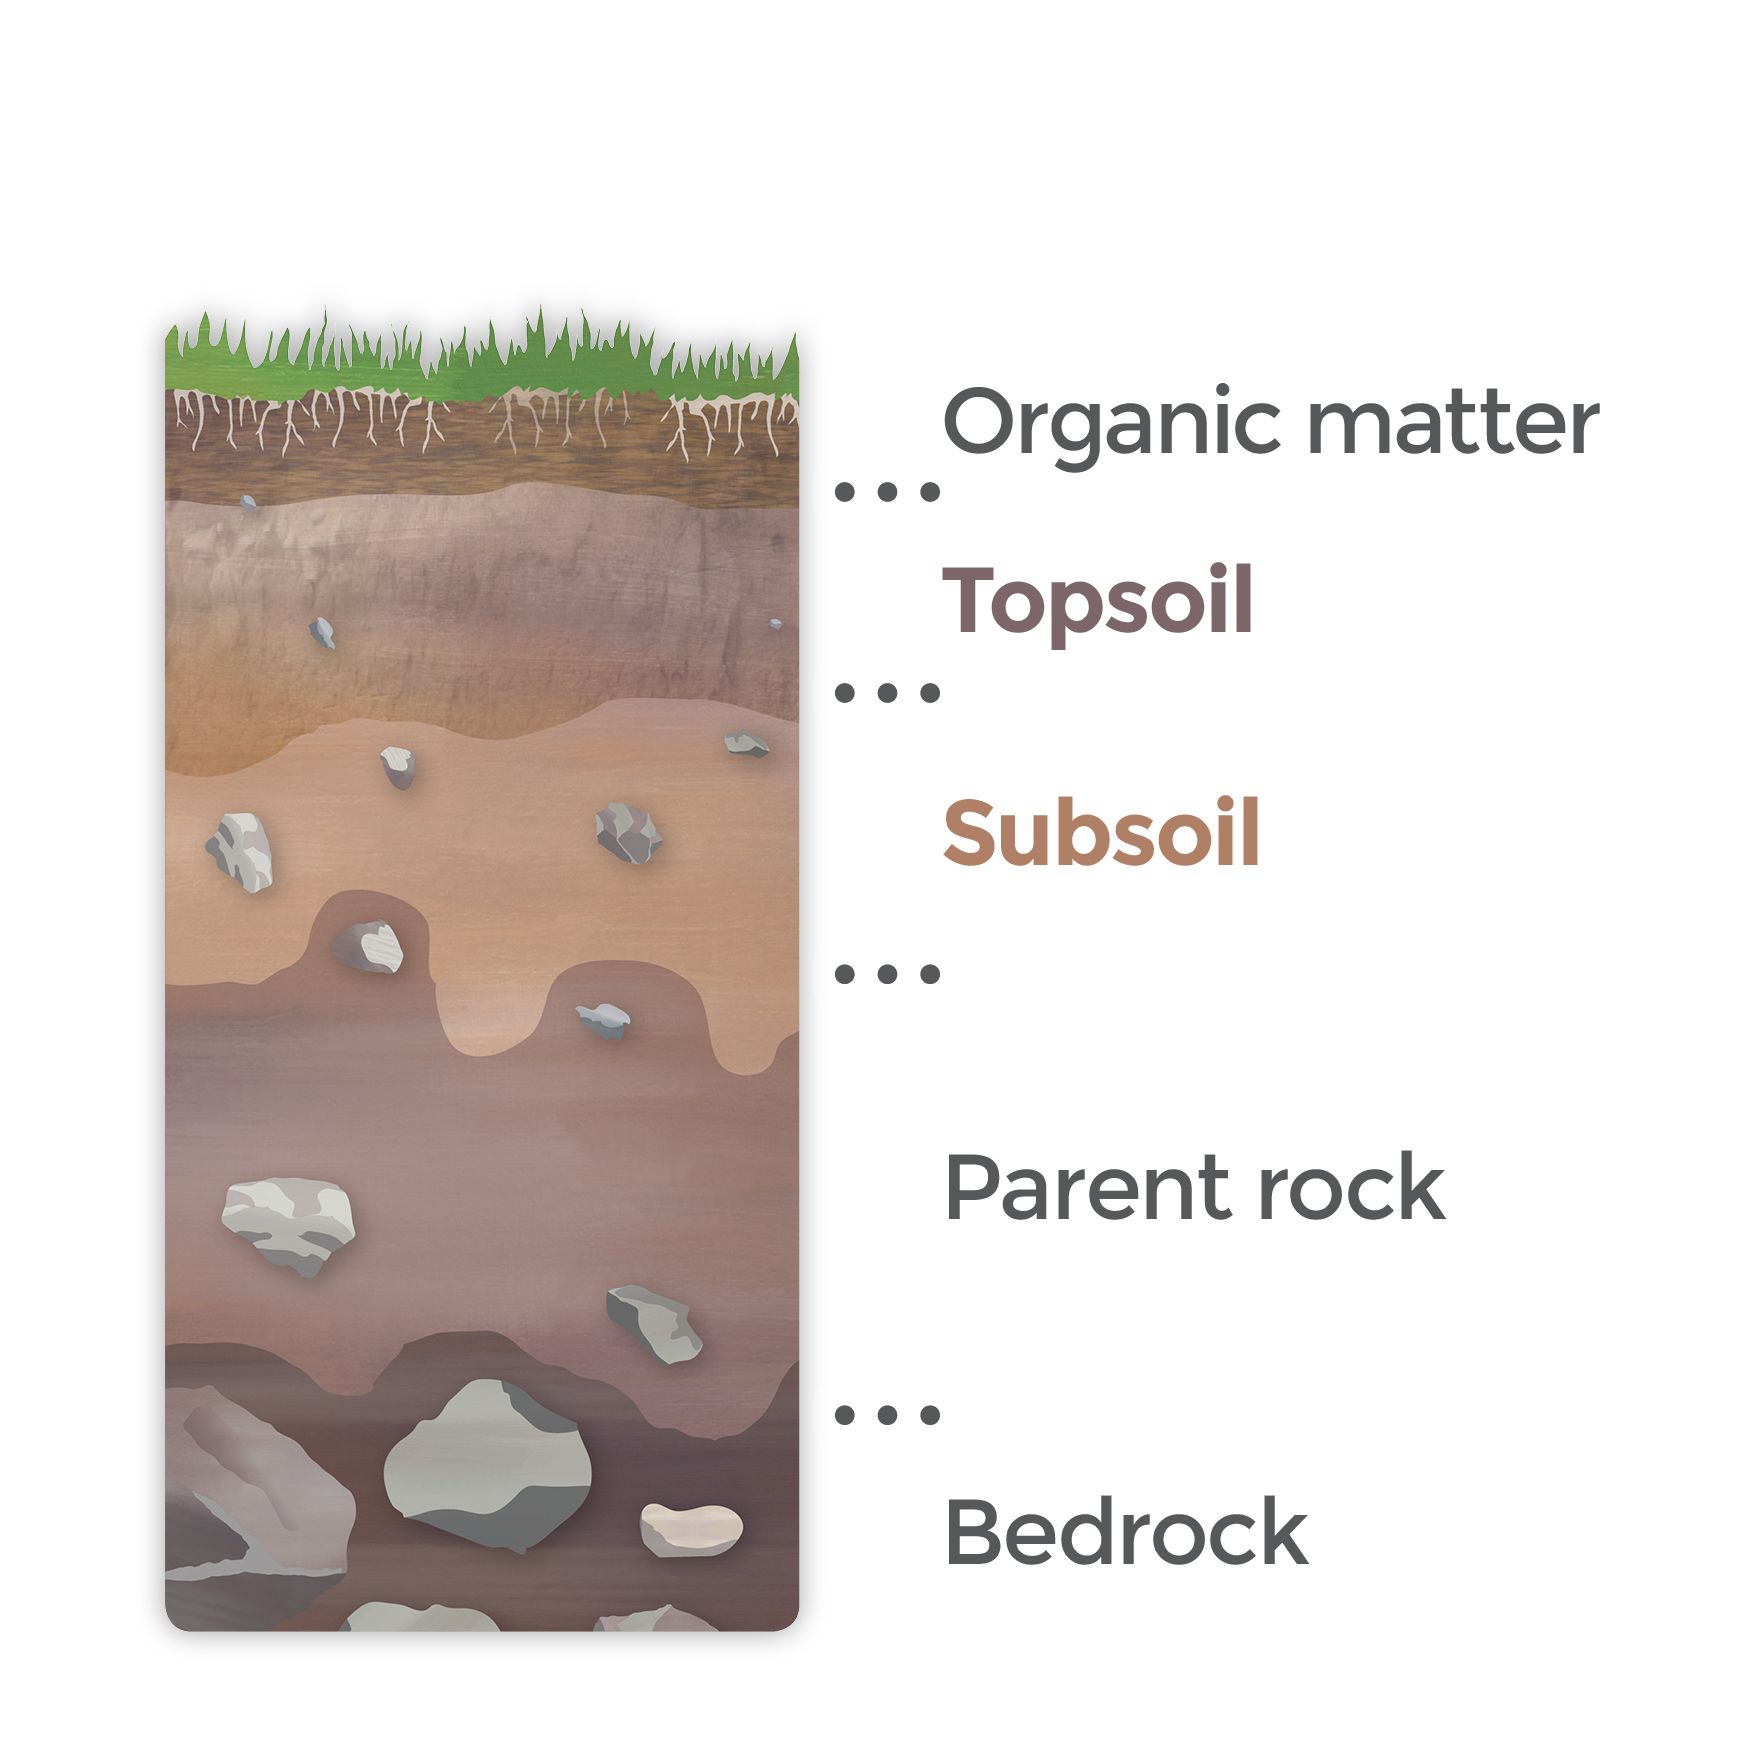 Soil layers, from top: Organic matter, topsoil, subsoil, parent rock, bedrock